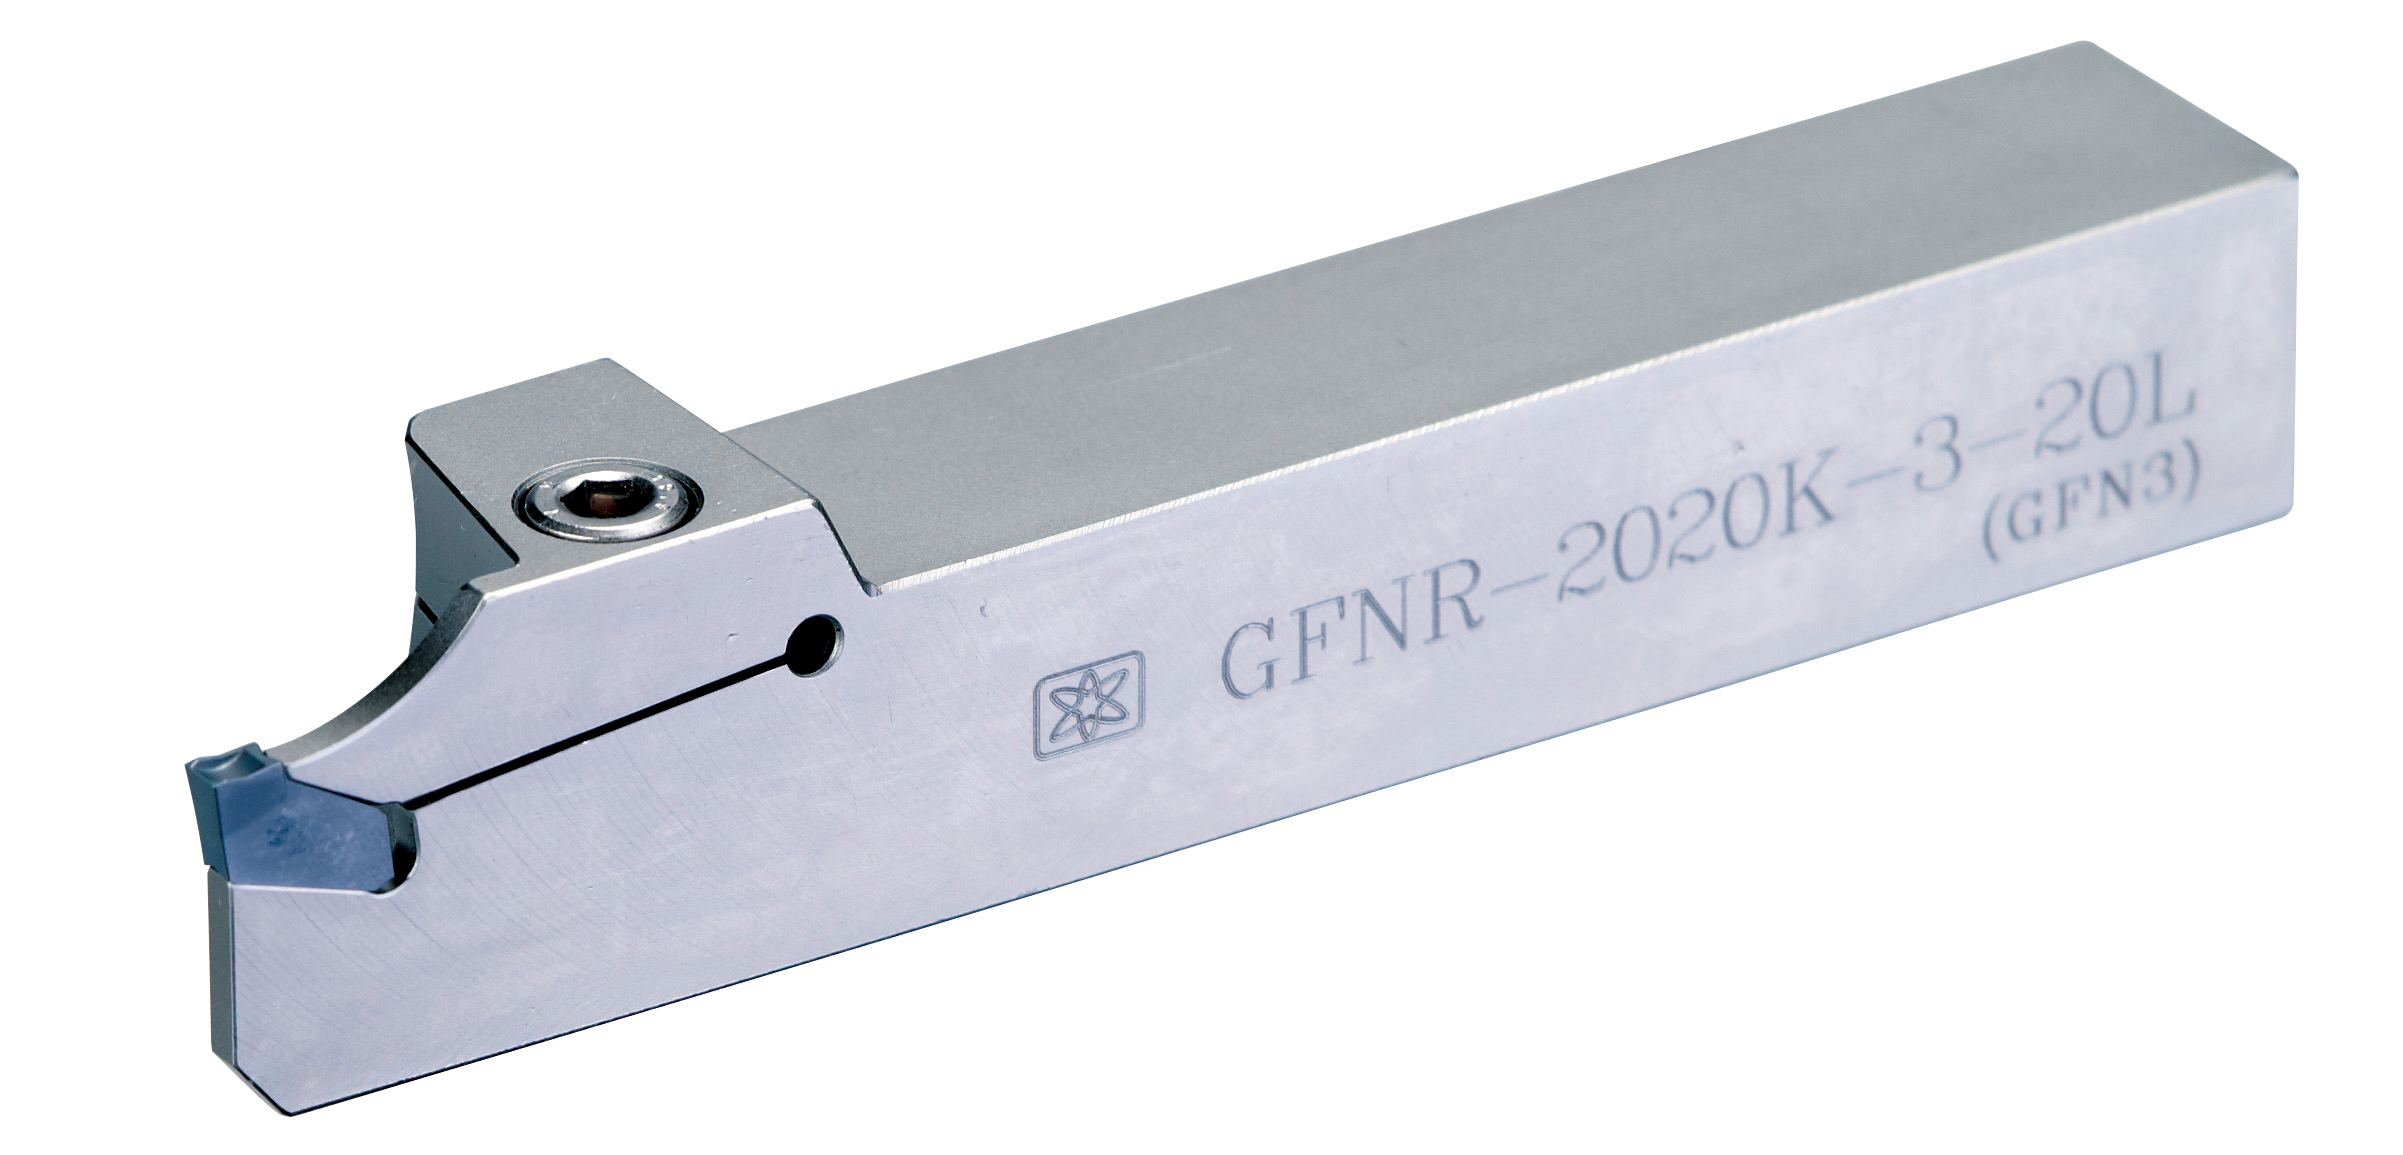 產品|GFNR (GFN2 / GFN3) 外徑切槽刀